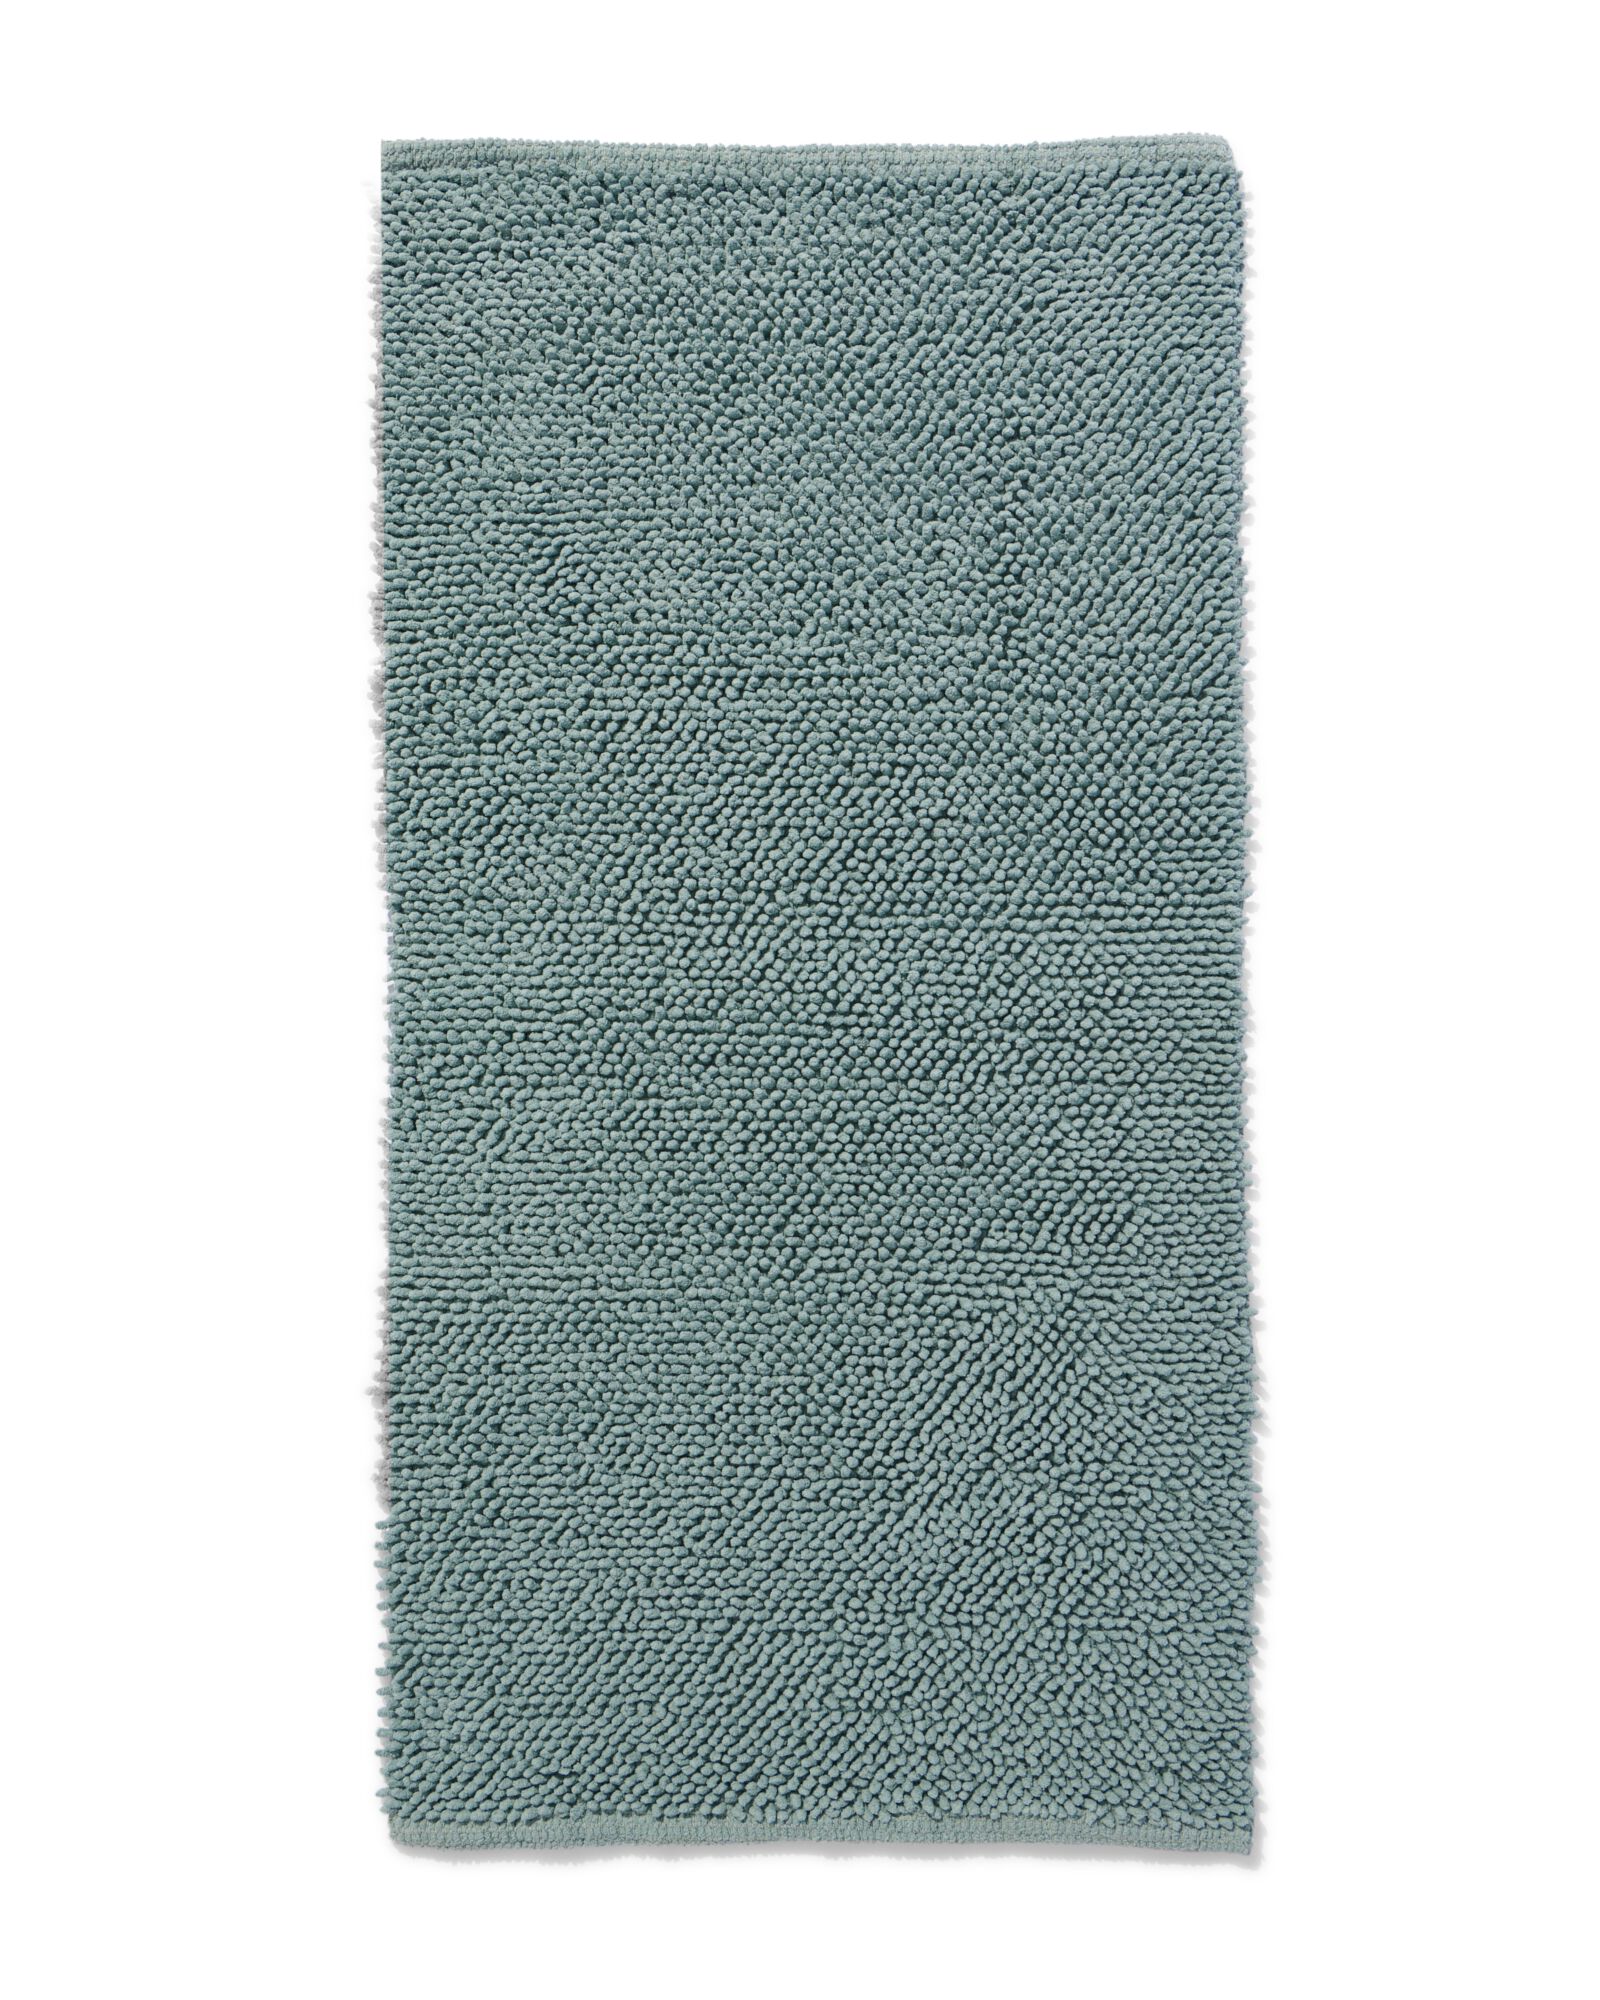 badmat 60x120 chenille groenblauw - 5210201 - HEMA